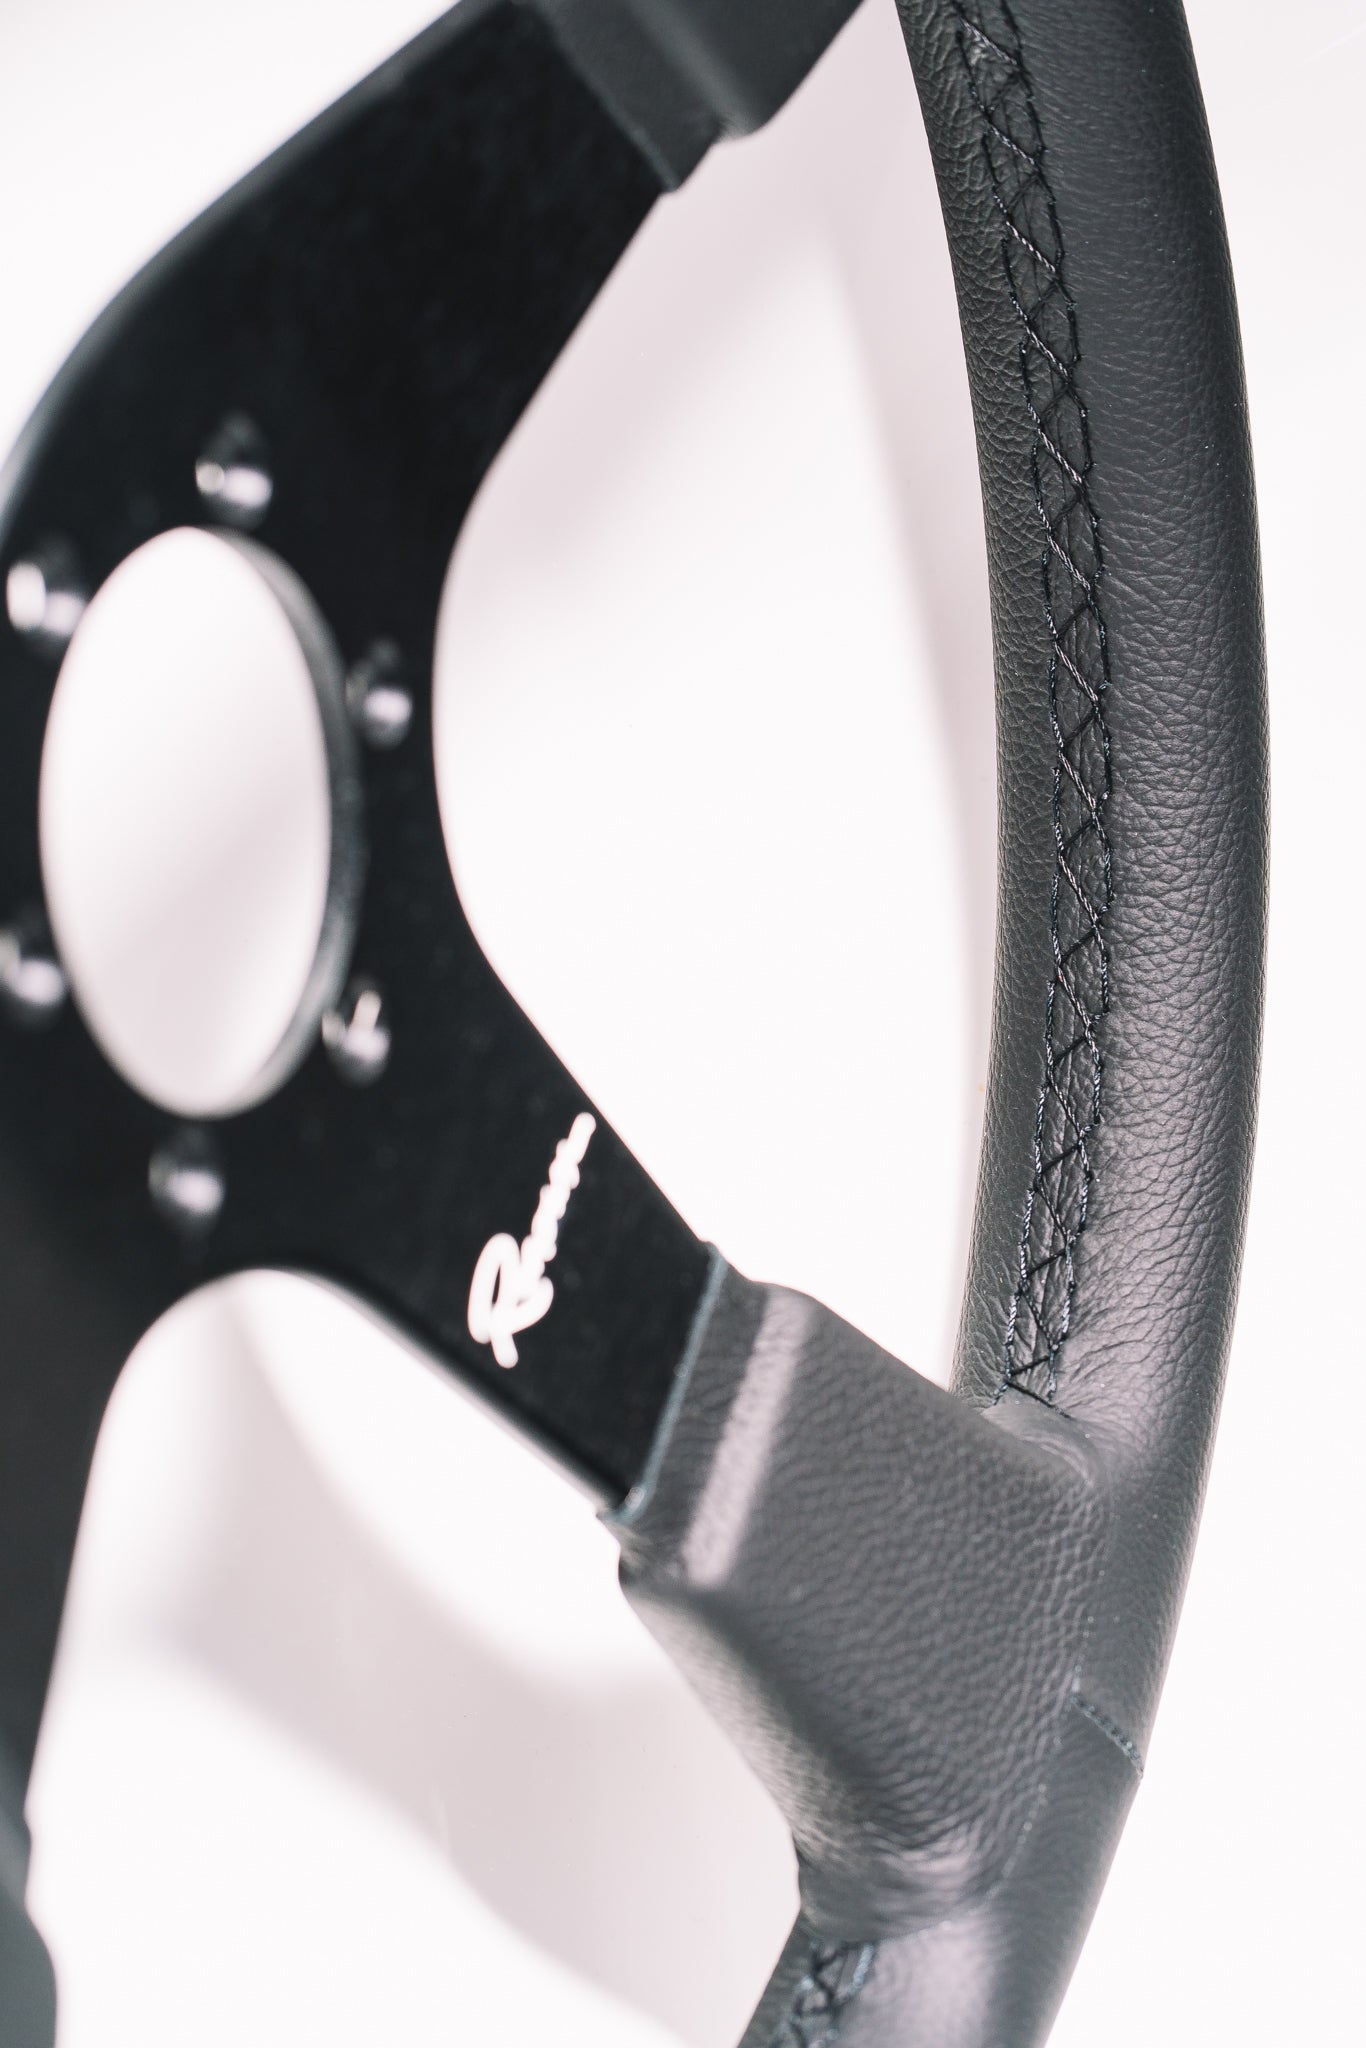 Renown Monterey 380mm Steering Wheel